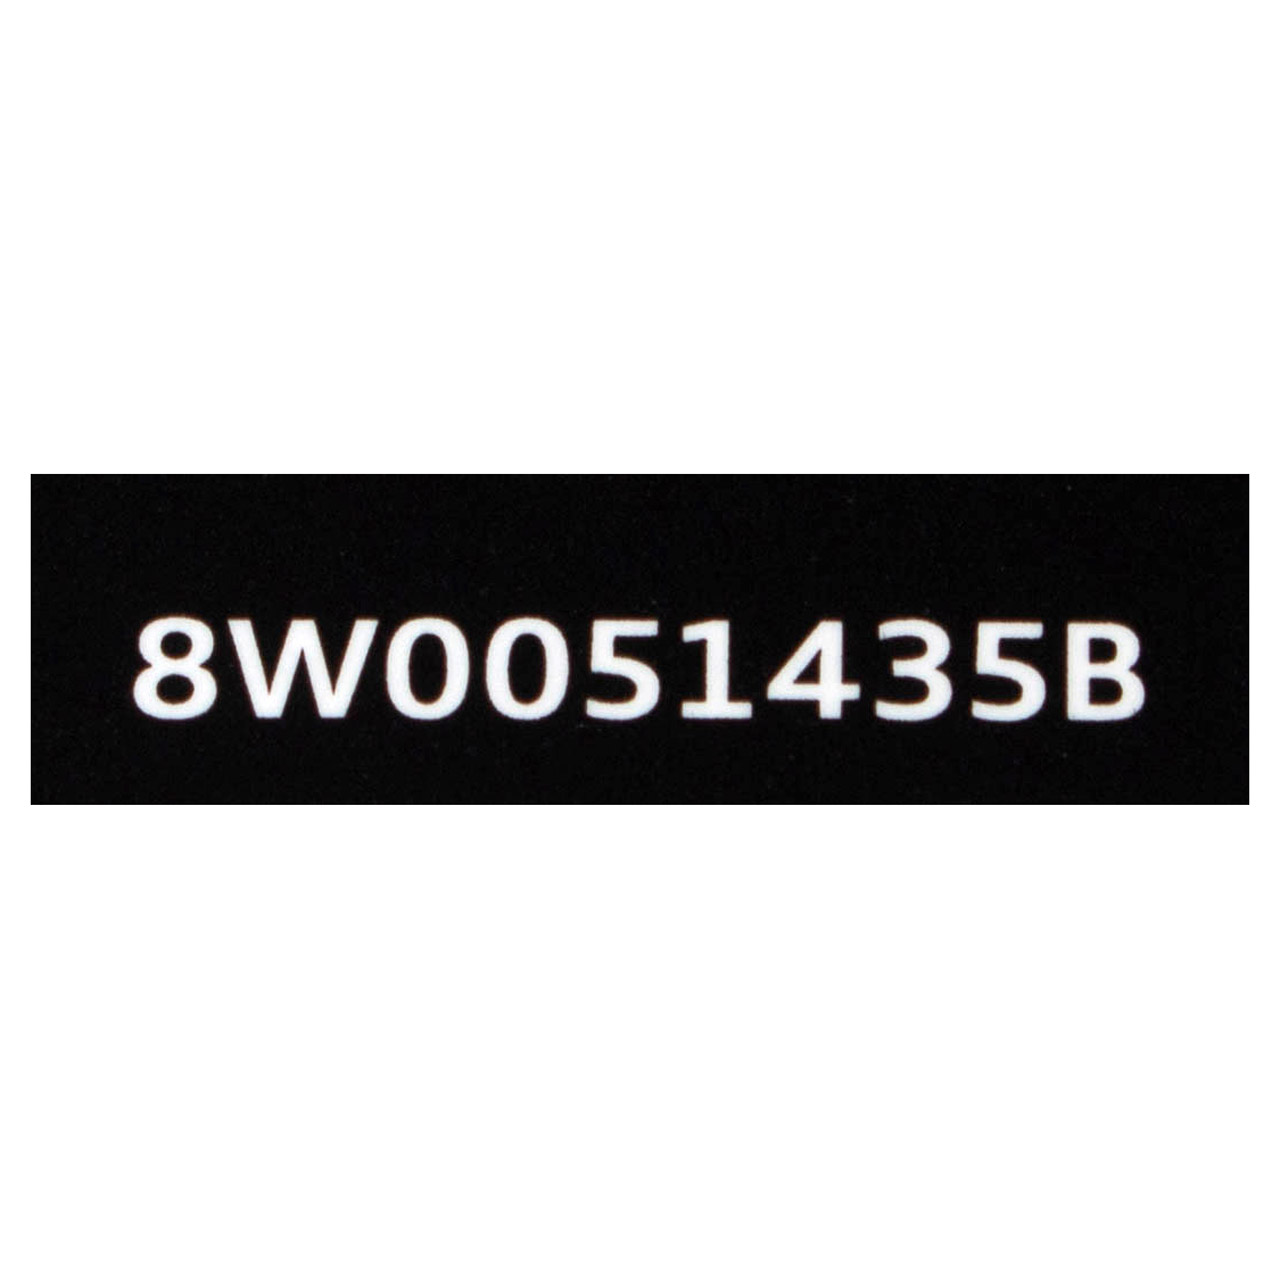 ORIGINAL Audi Ladehülle Handycover Induktive Wireless Laden iPhone 7 8W0051435B